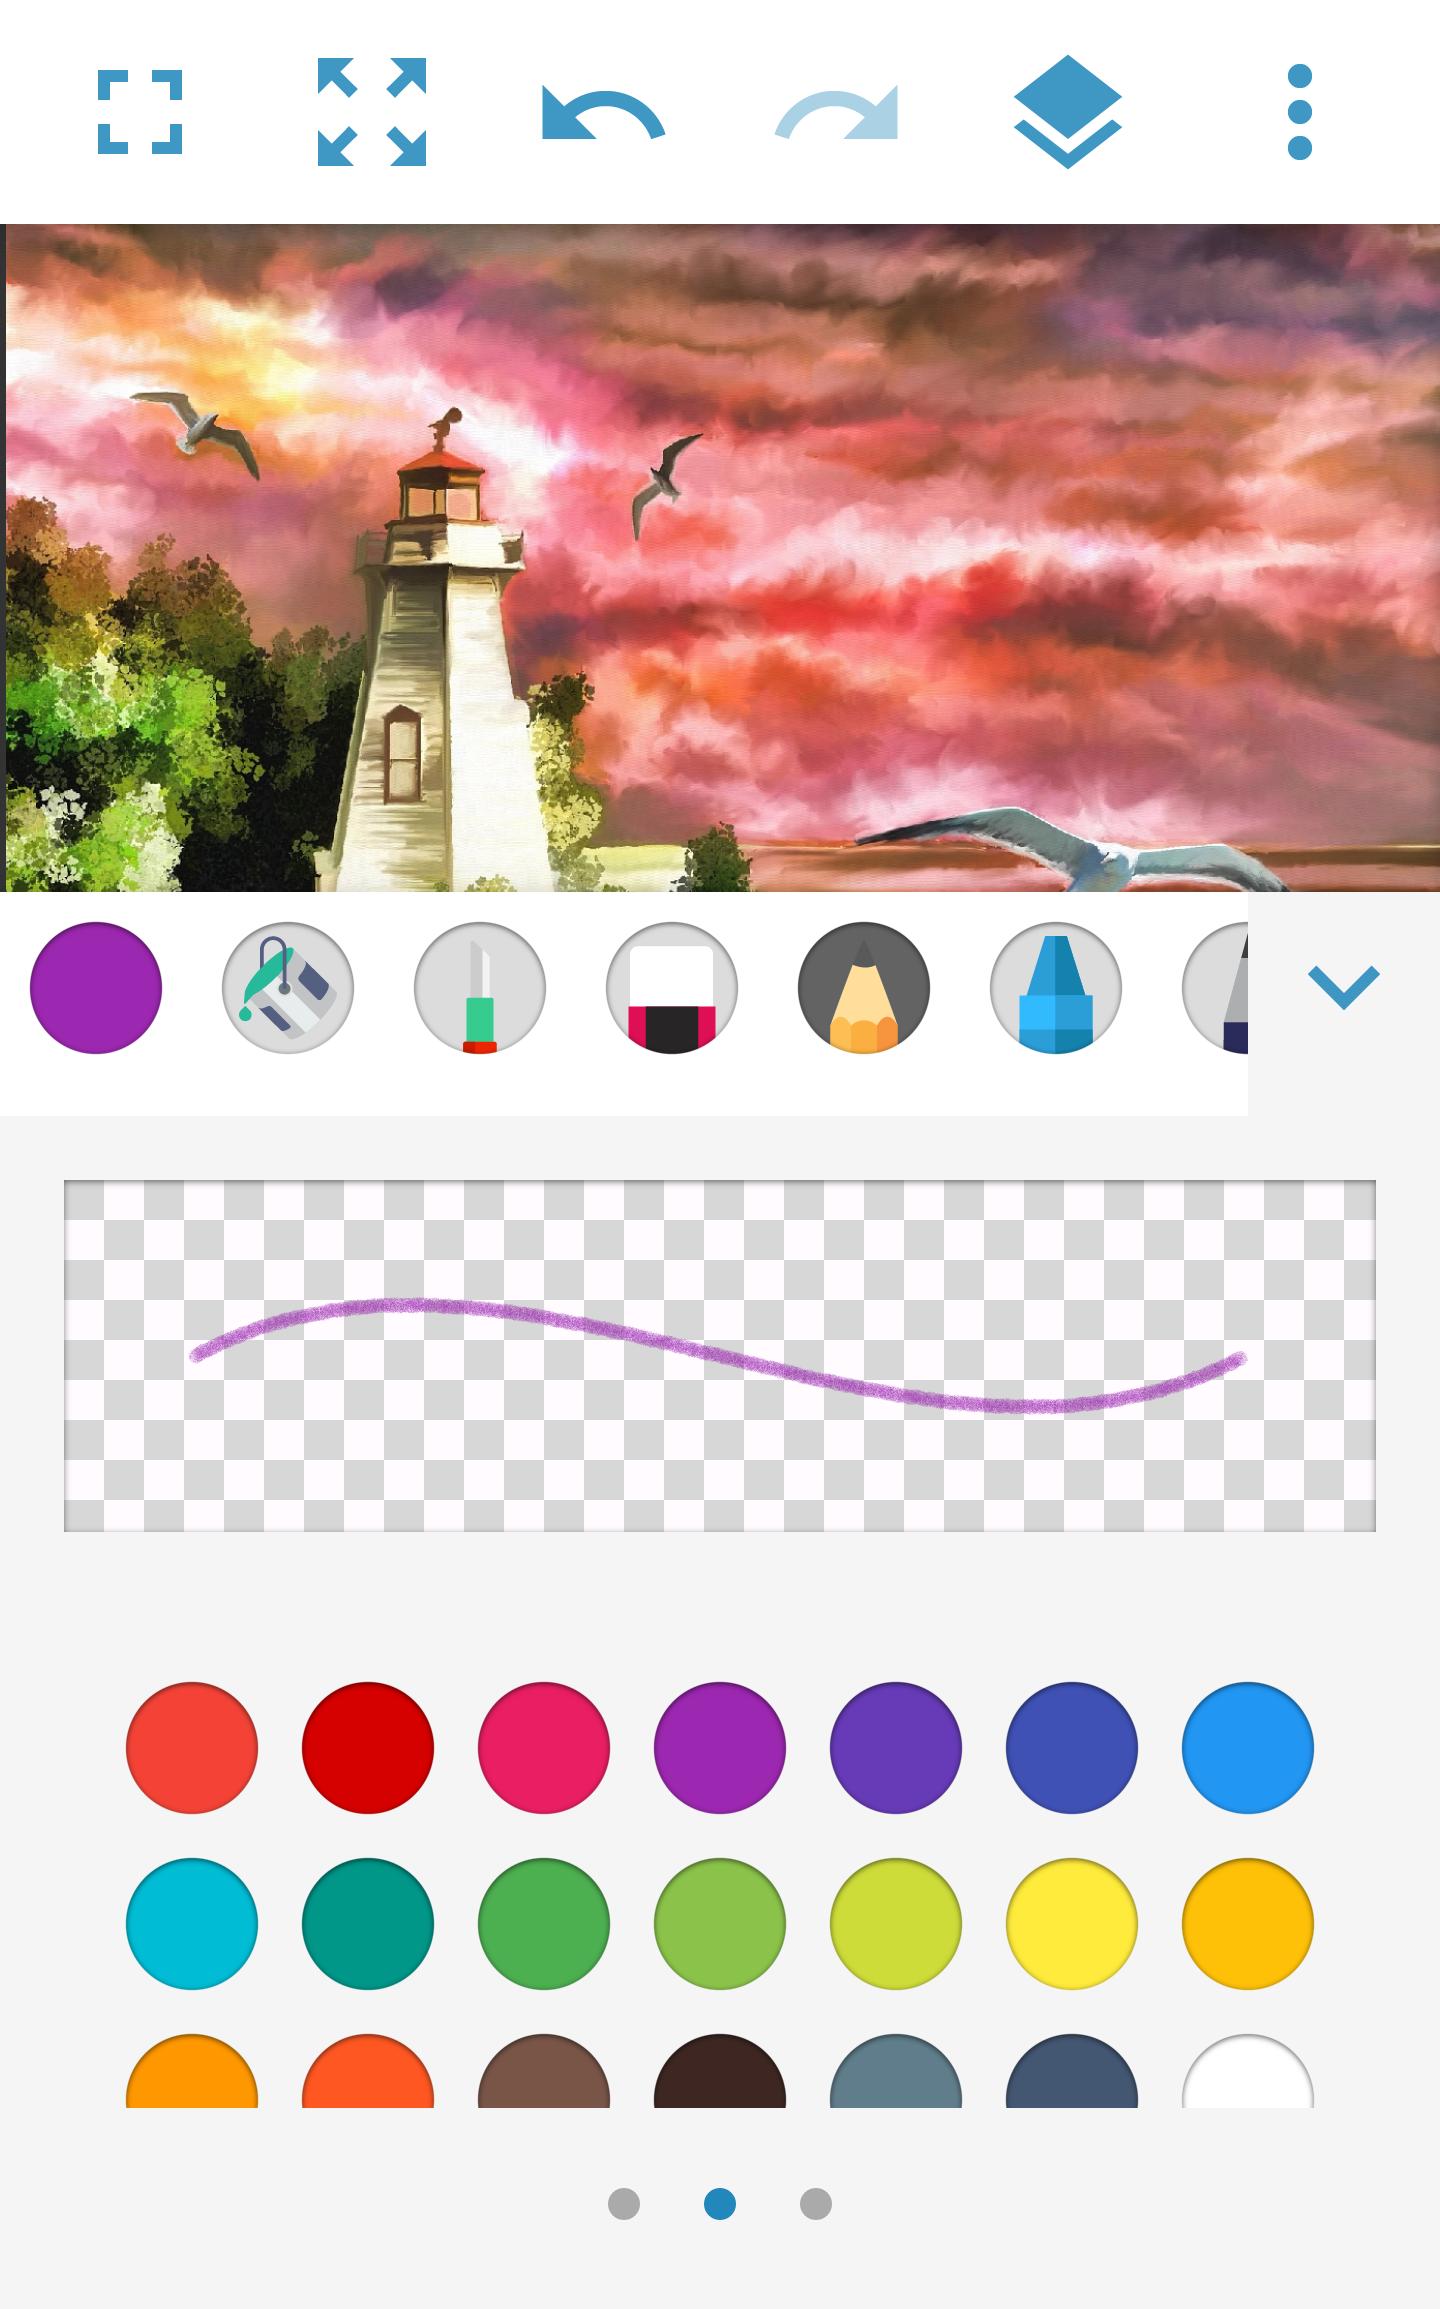 SketchBook 🖌🖍 - draw, sketch & paint 2.0.3 Screenshot 4